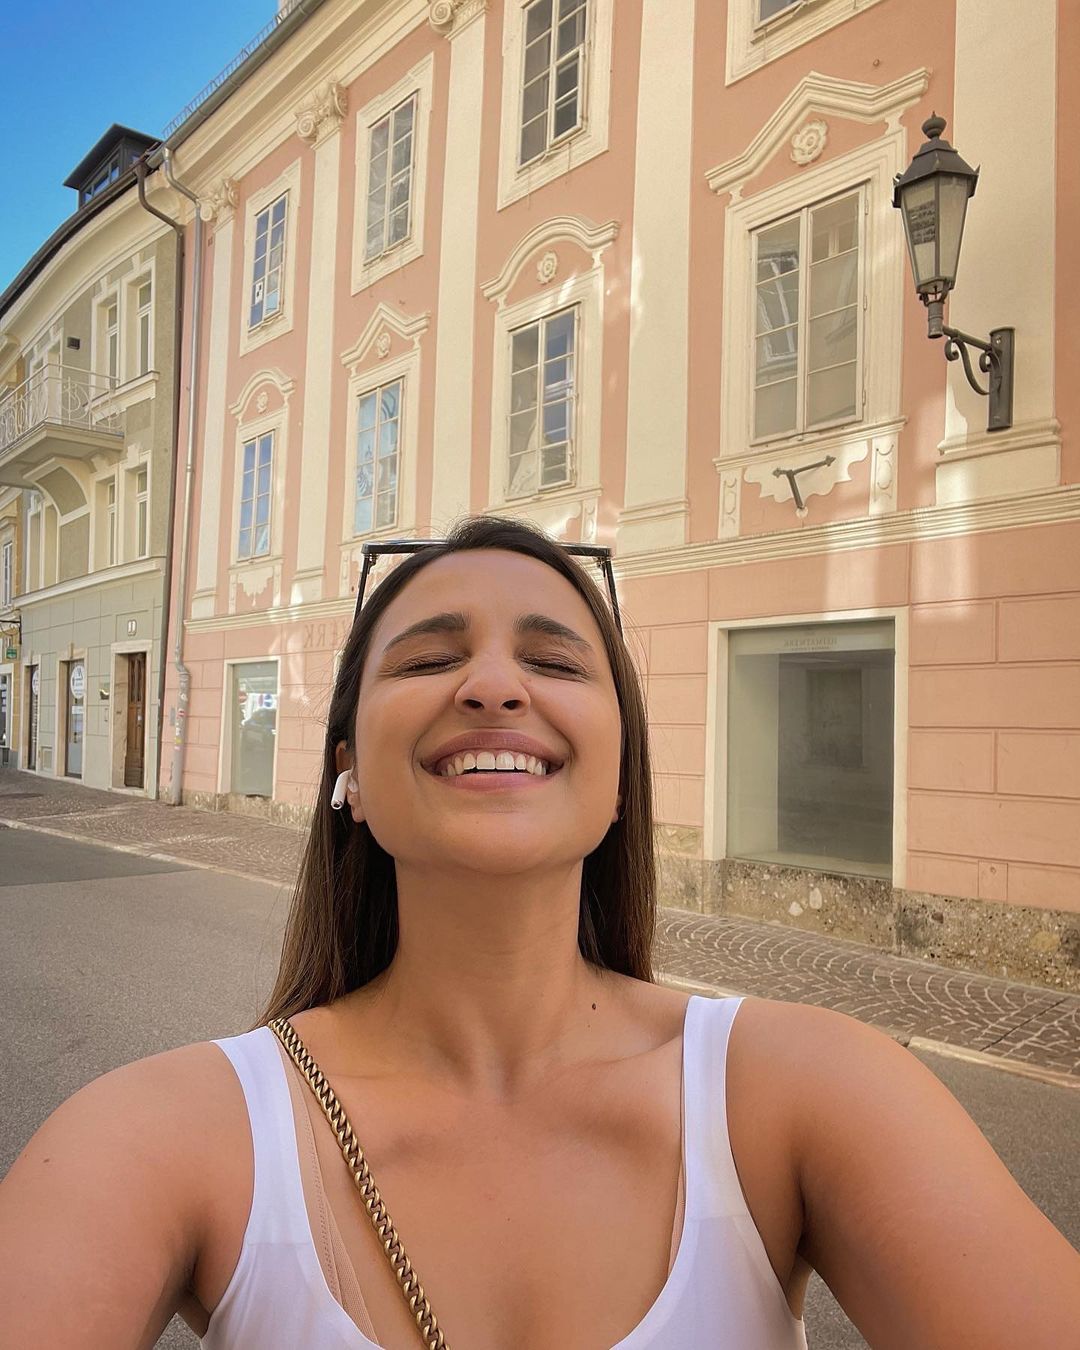  Parineeti Chopra looks happy taking selfies in an Austrian street. (Image: Instagram)